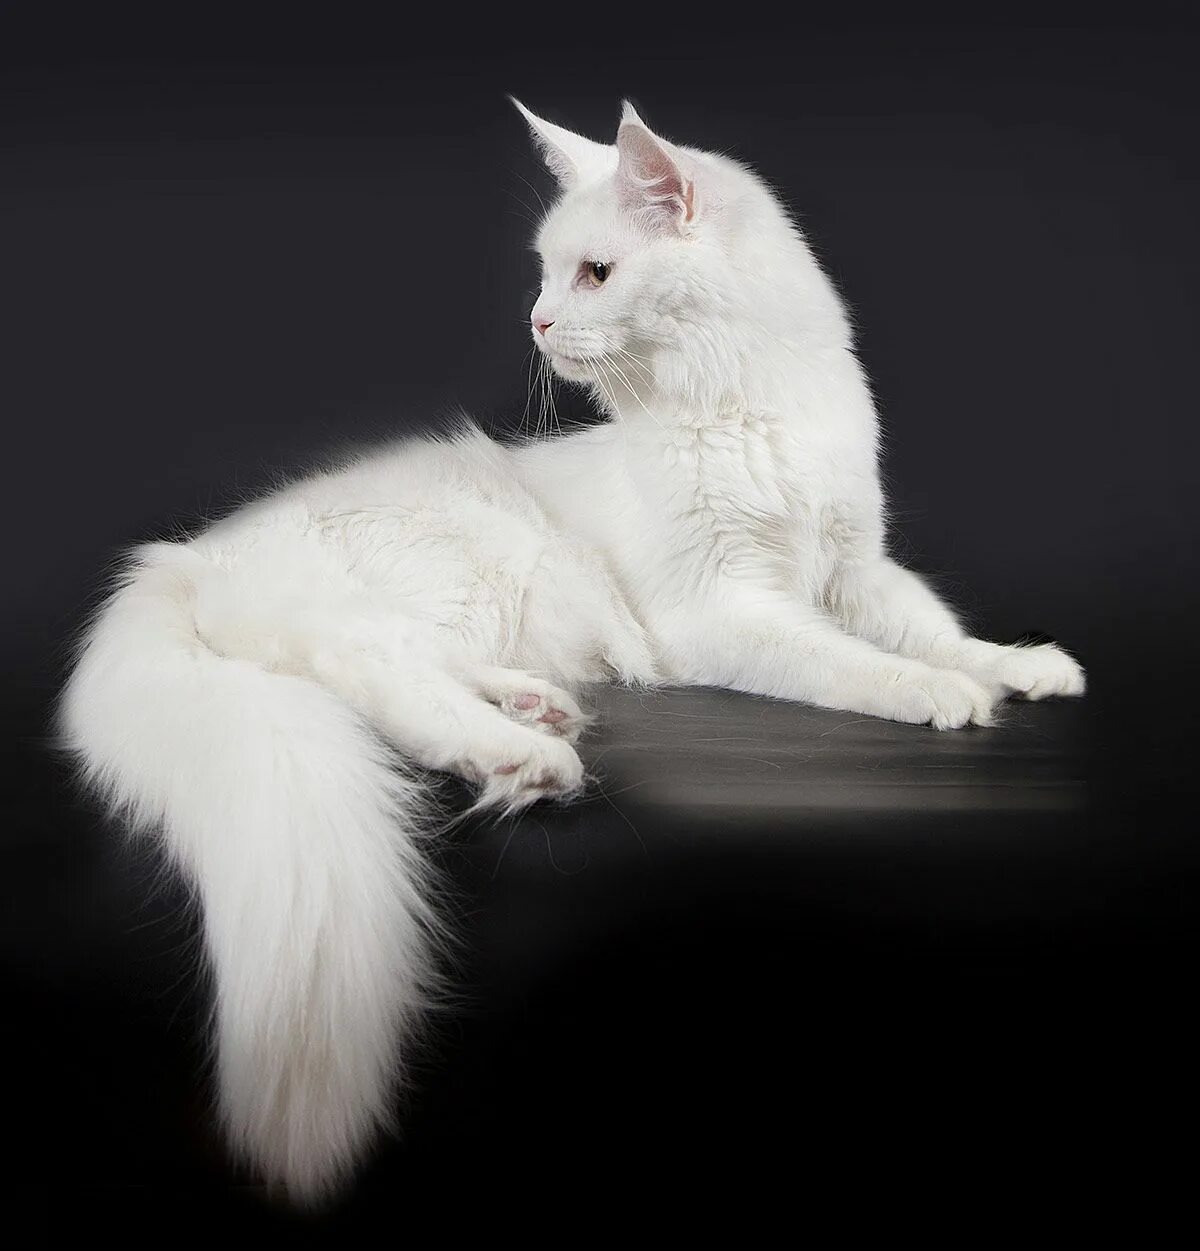 Мейн кун белый. Белая кошка Мейн кун. Мейн кун белый котенок. Белый котенок Мейн куна. Белый мейкун